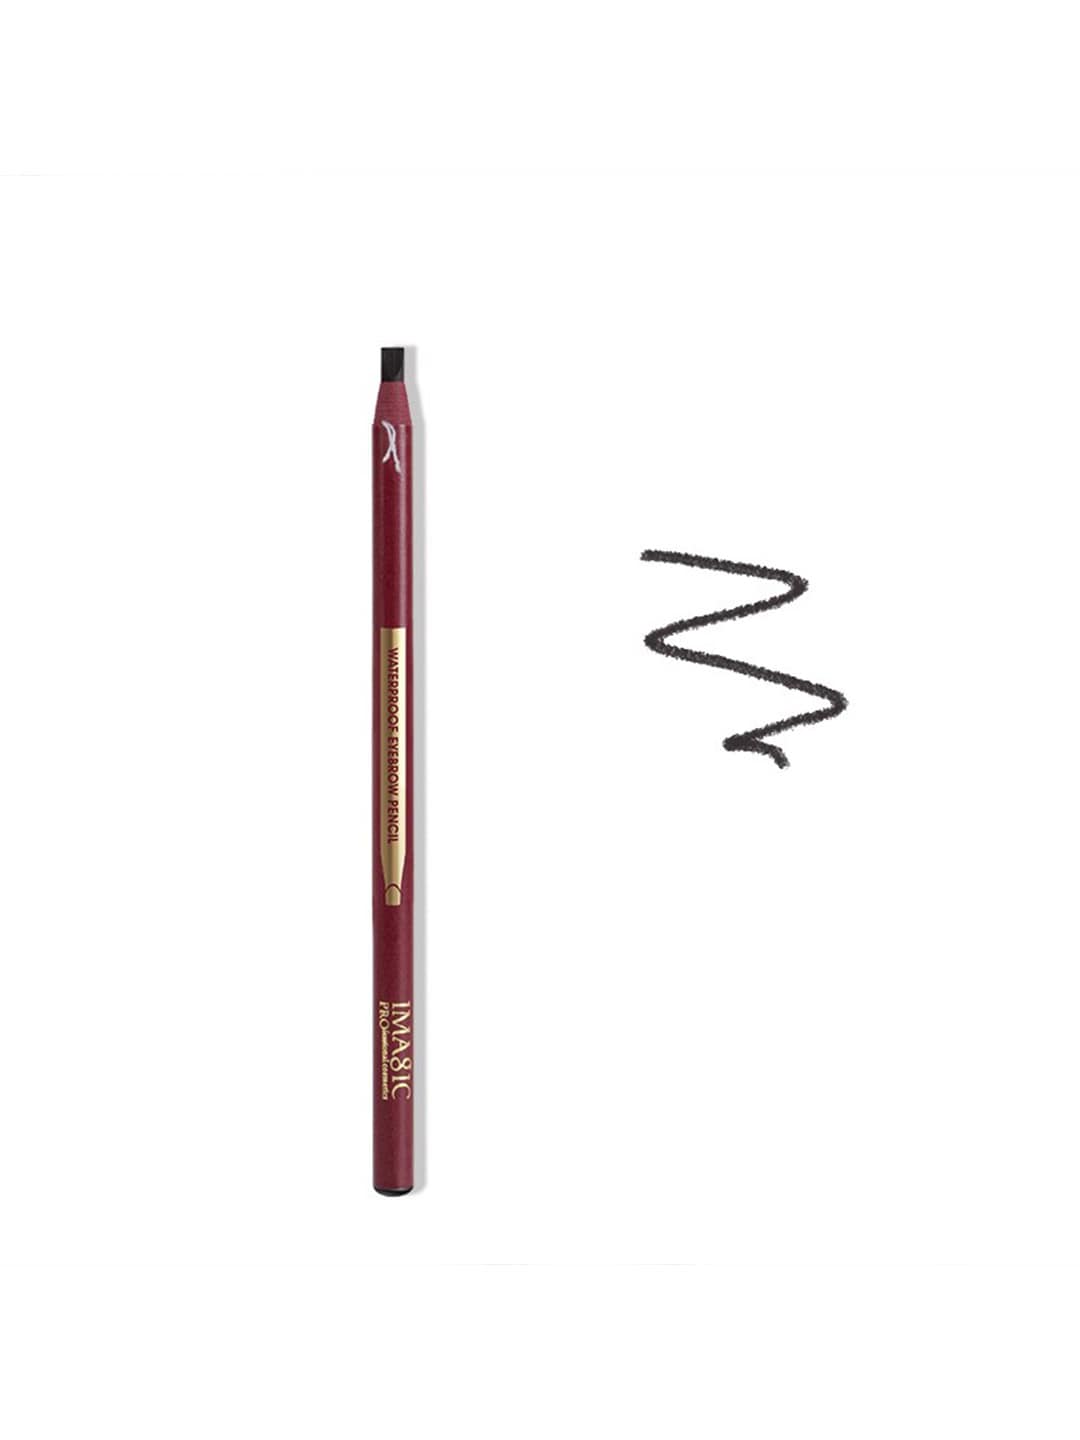 IMAGIC PROfessional Cosmetics Hard Formula Peelable Eyebrow Pencil 8 g - Black EY-344 Price in India